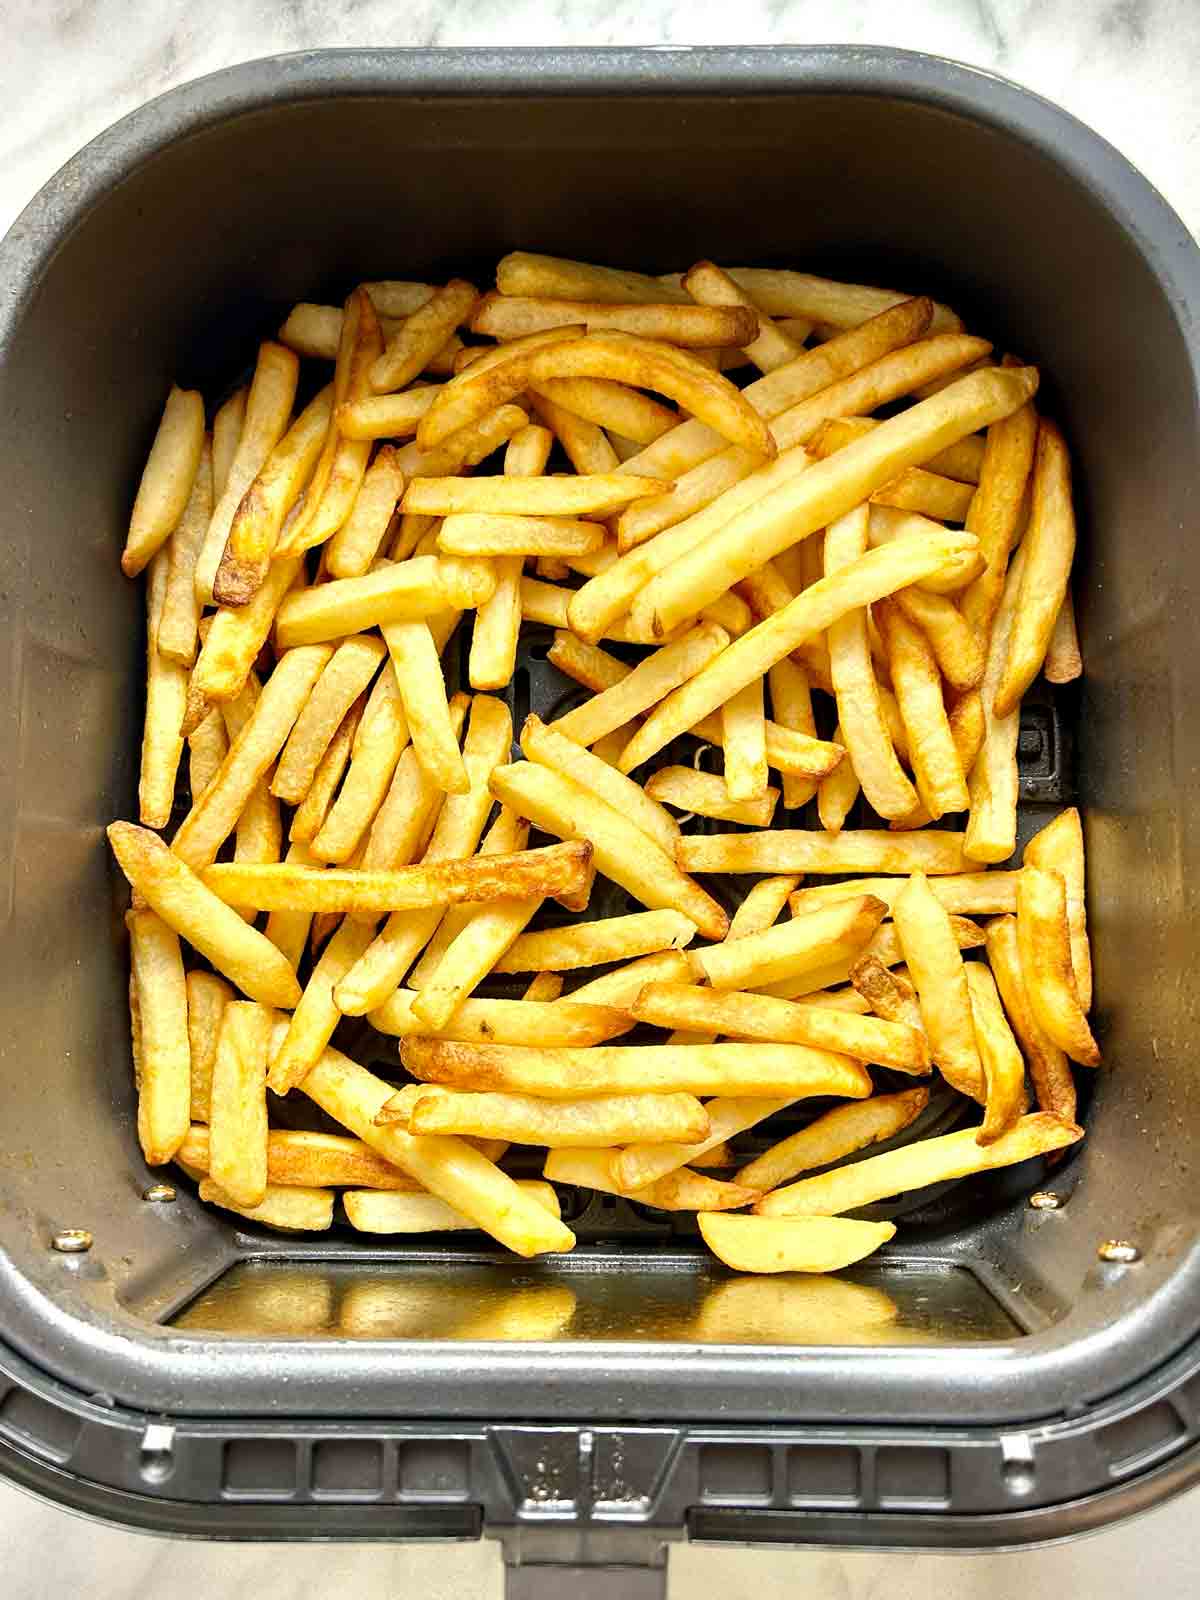 cooked fries in air fryer basket.